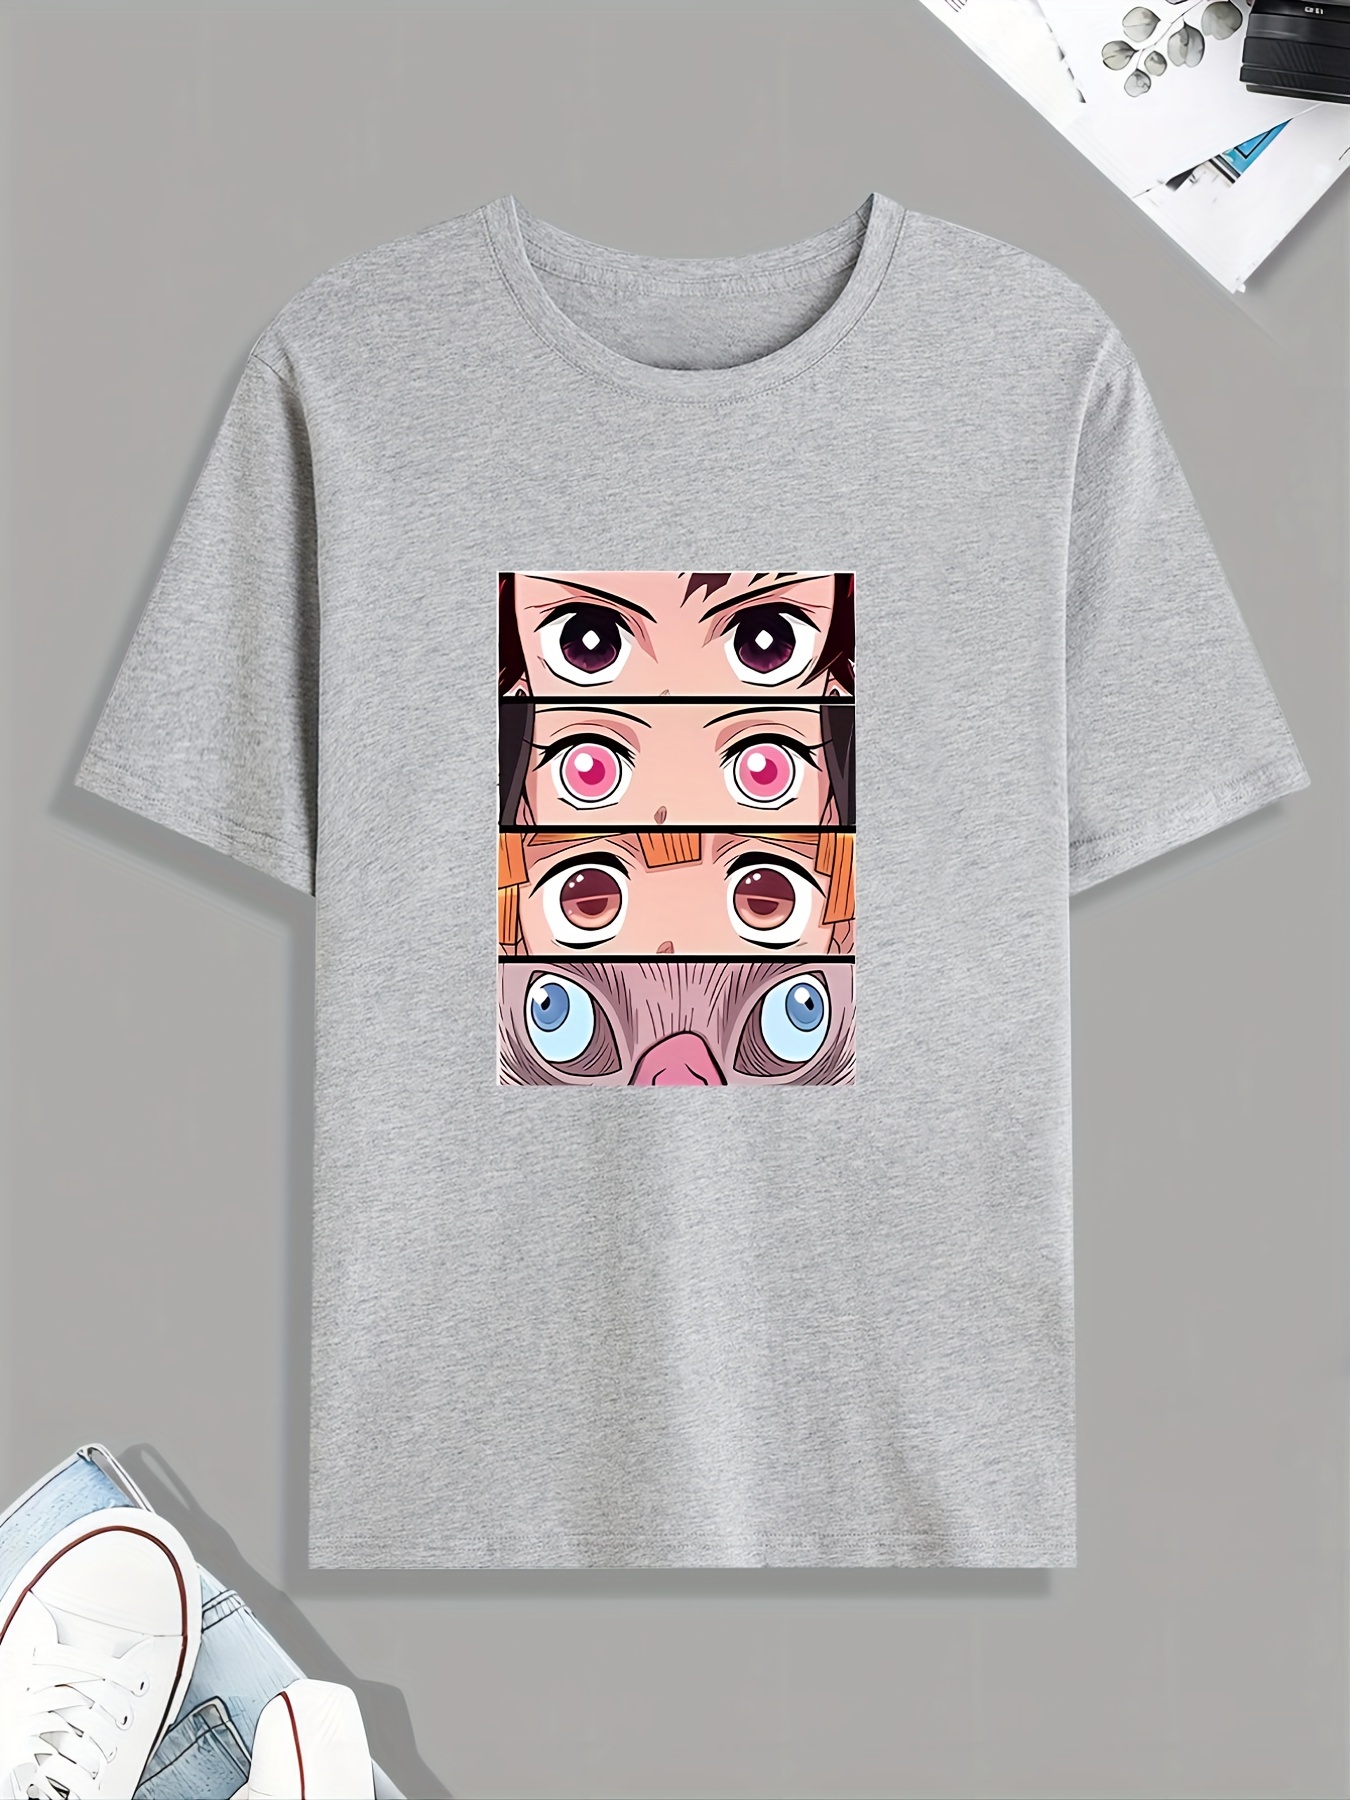 Shop Dry Fit Shirt For Men Sale Anime Design online  Lazadacomph